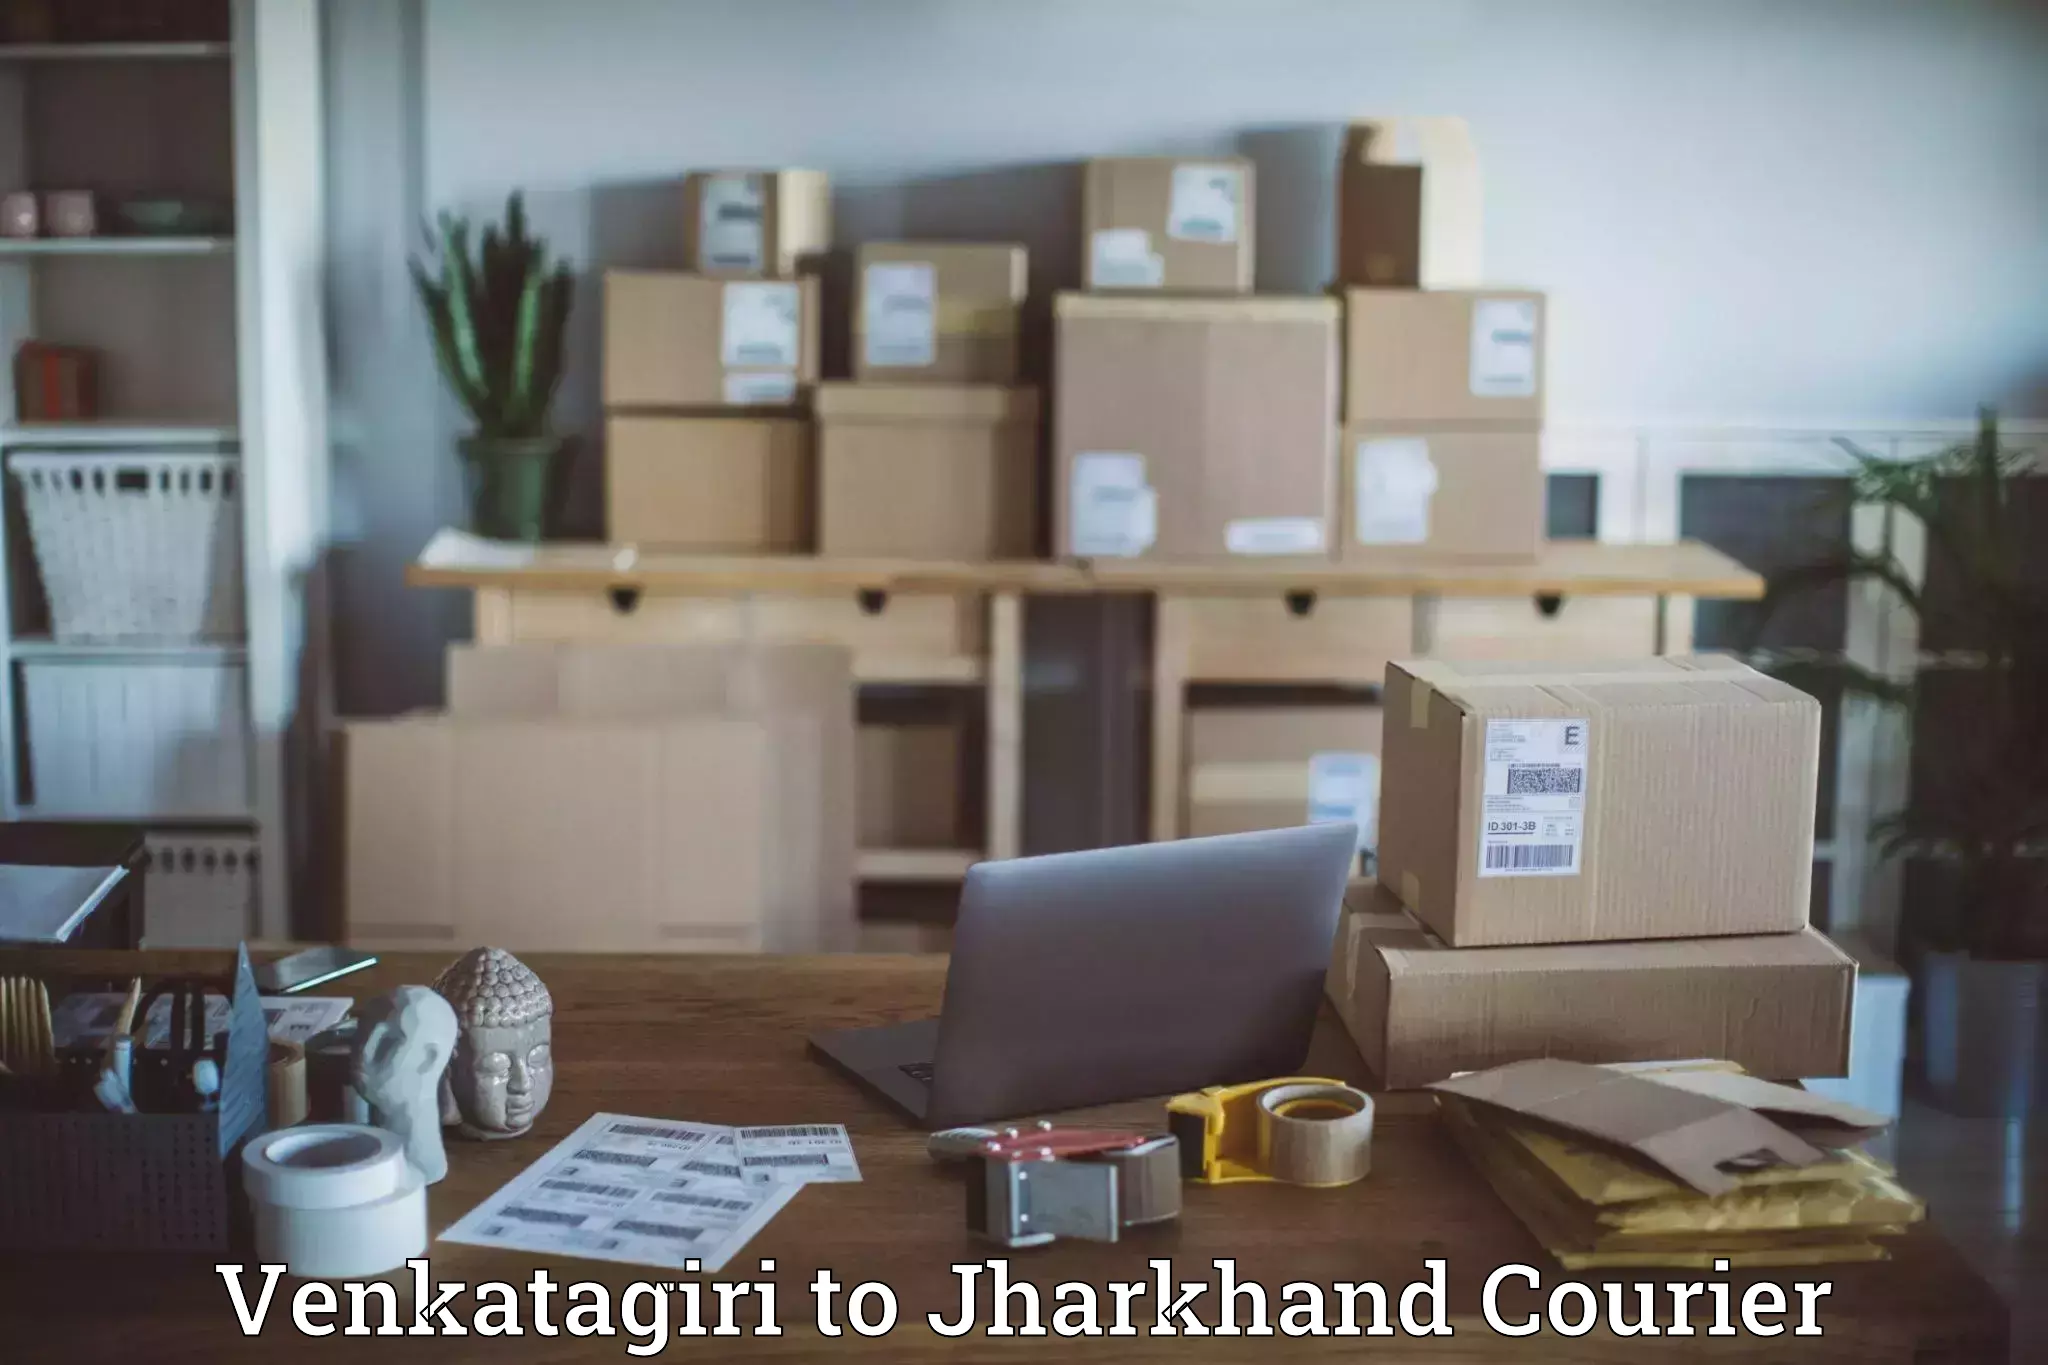 Round-the-clock parcel delivery Venkatagiri to Ranchi